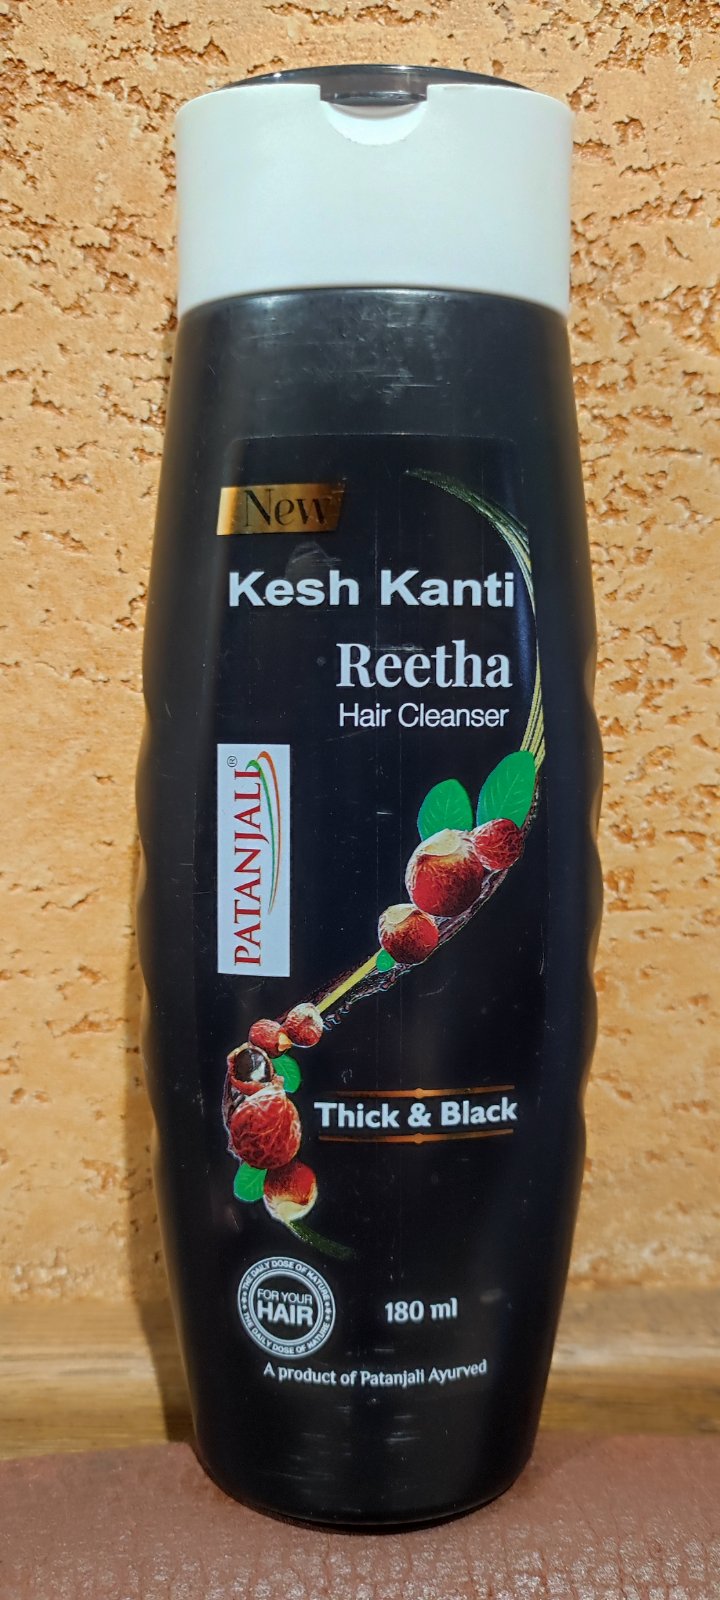 Шампунь Патанджали Ритха для укрепления волос Кеш канти Reetha  Hair Cleanser Патанджали аюрведа Kesh Kanti Patanjali 200 мл.